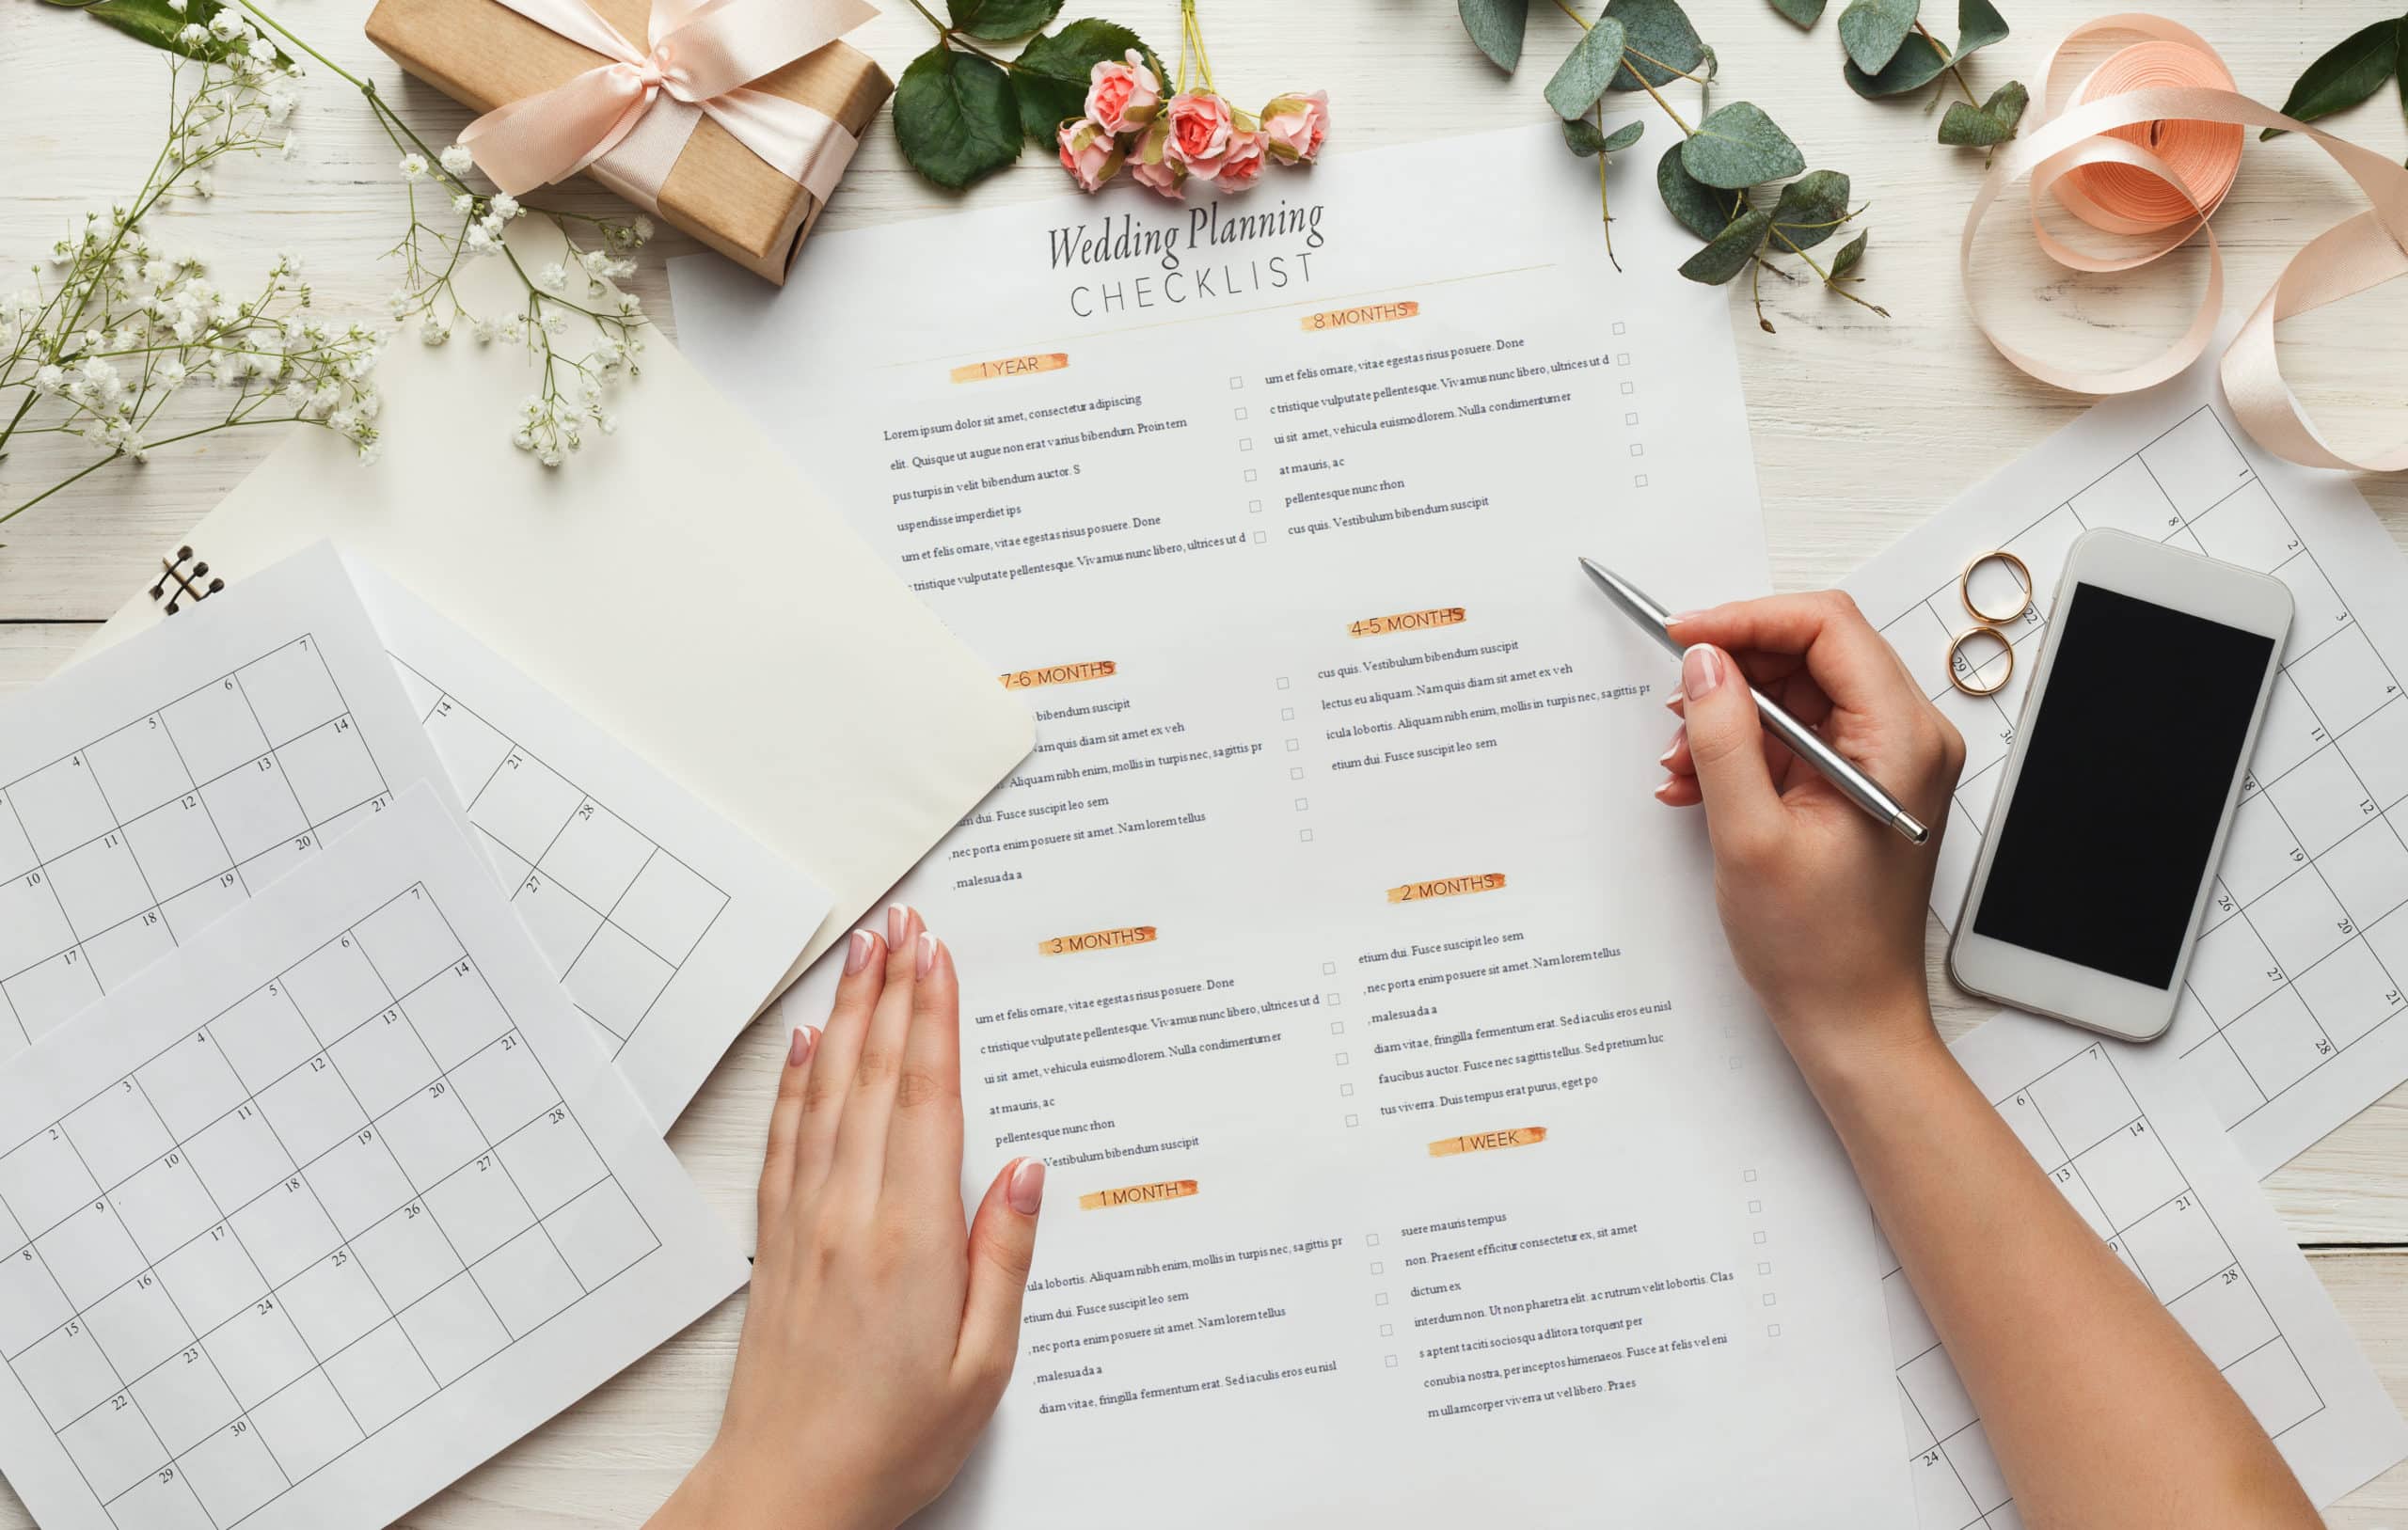 A wedding planner looks over an extensive wedding planning checklist.